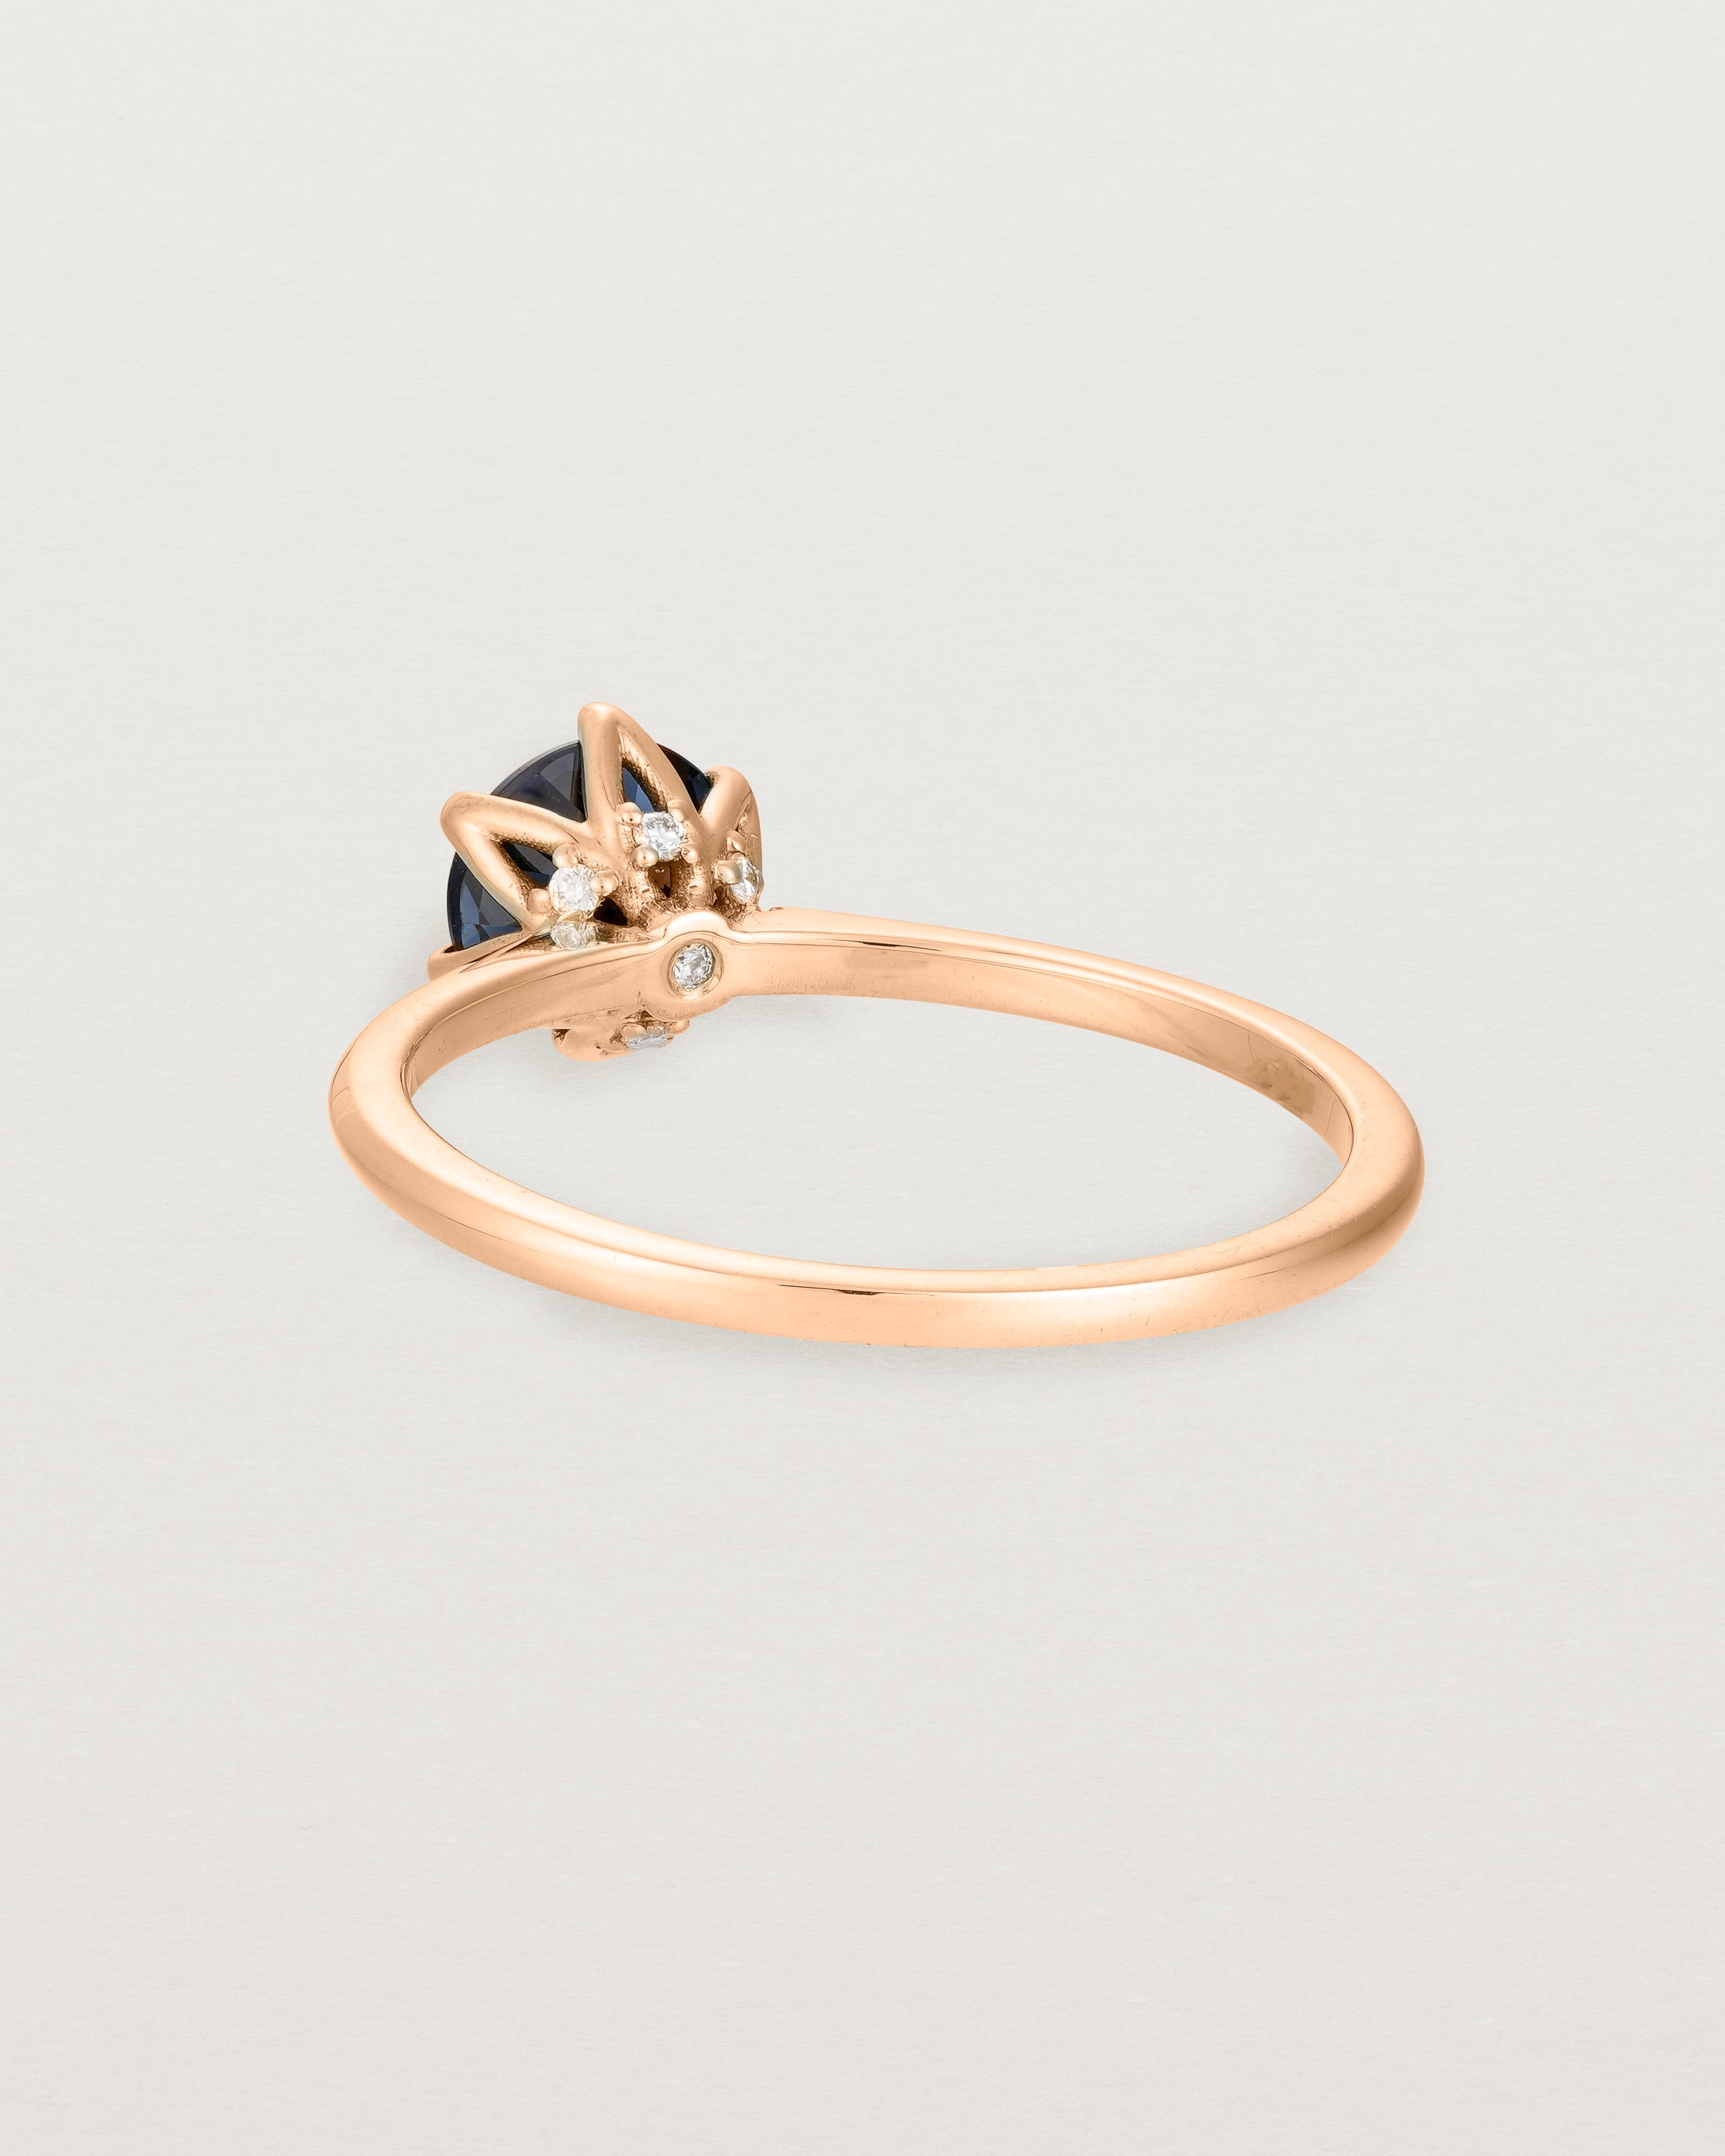 Back view of the Mandala Solitaire Ring | Australian Sapphire & Diamonds | Rose Gold.